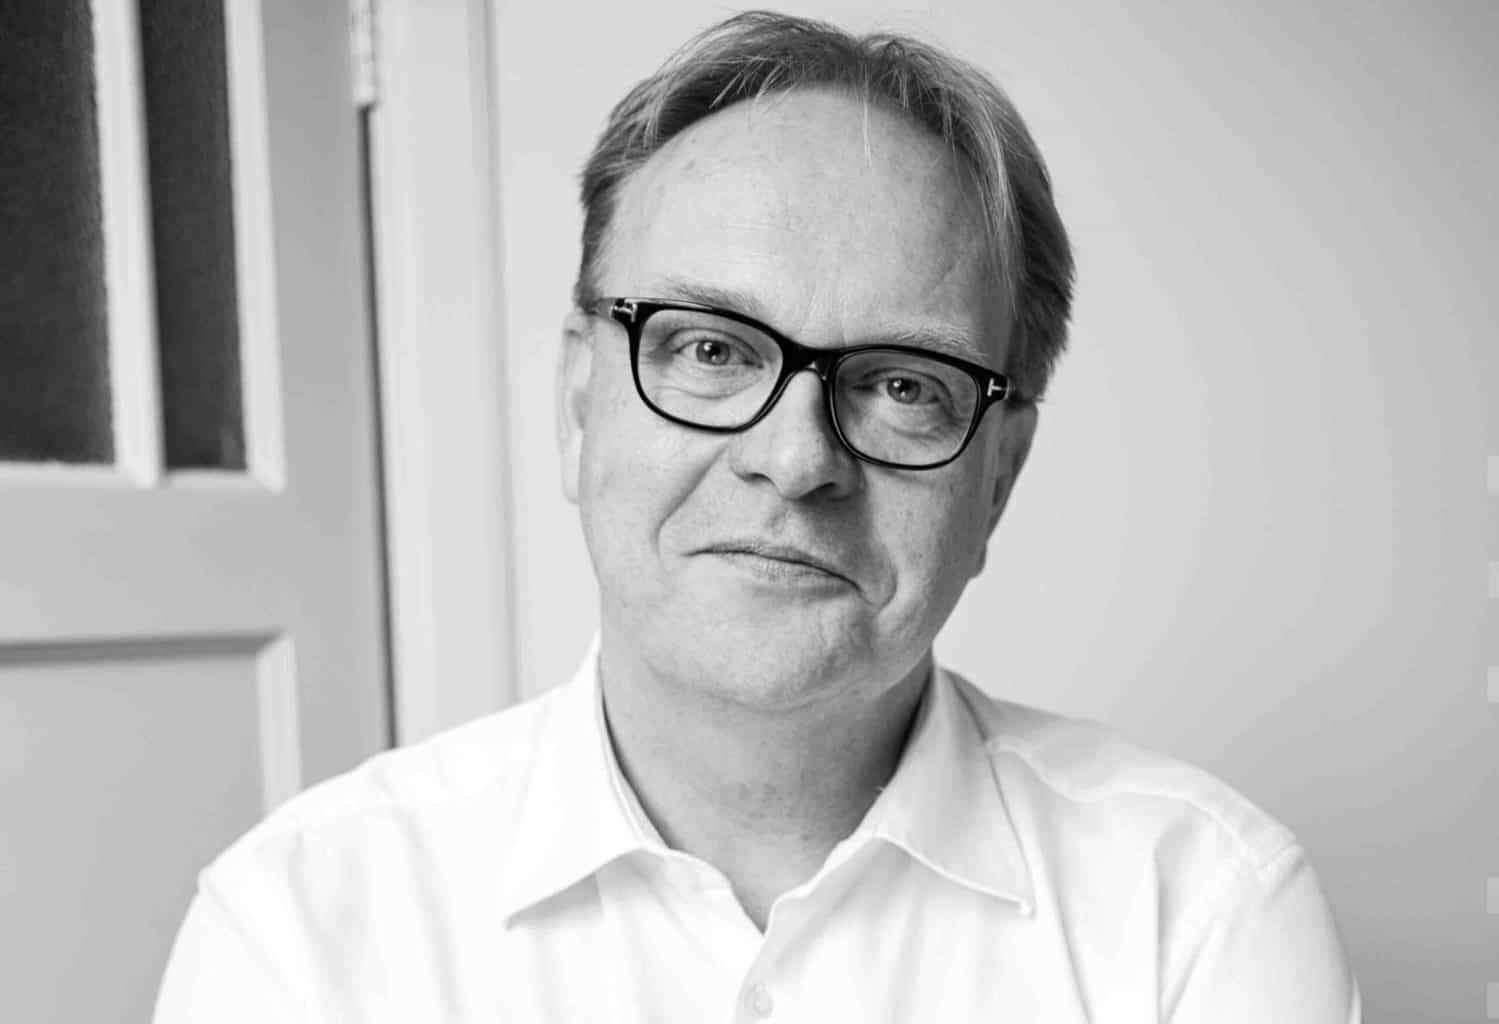 El presidente de VAN Kansspelen, Frits Huffnagel, deja el cargo